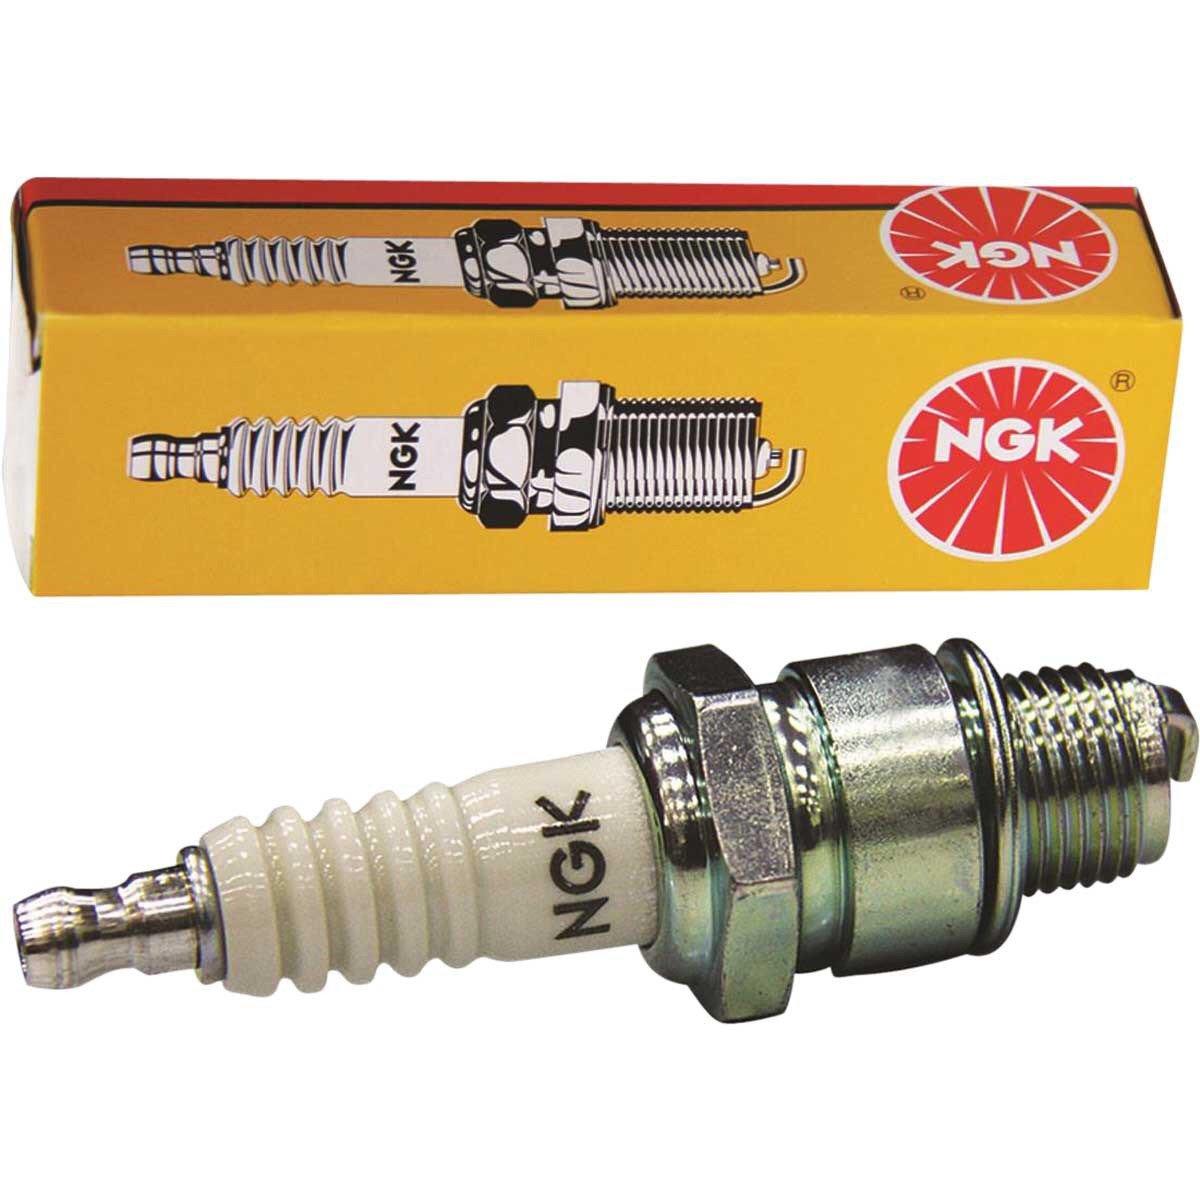 Name Brand NGK Spark Plug 70cc - 150cc - TaoTaoPartsDirect.com